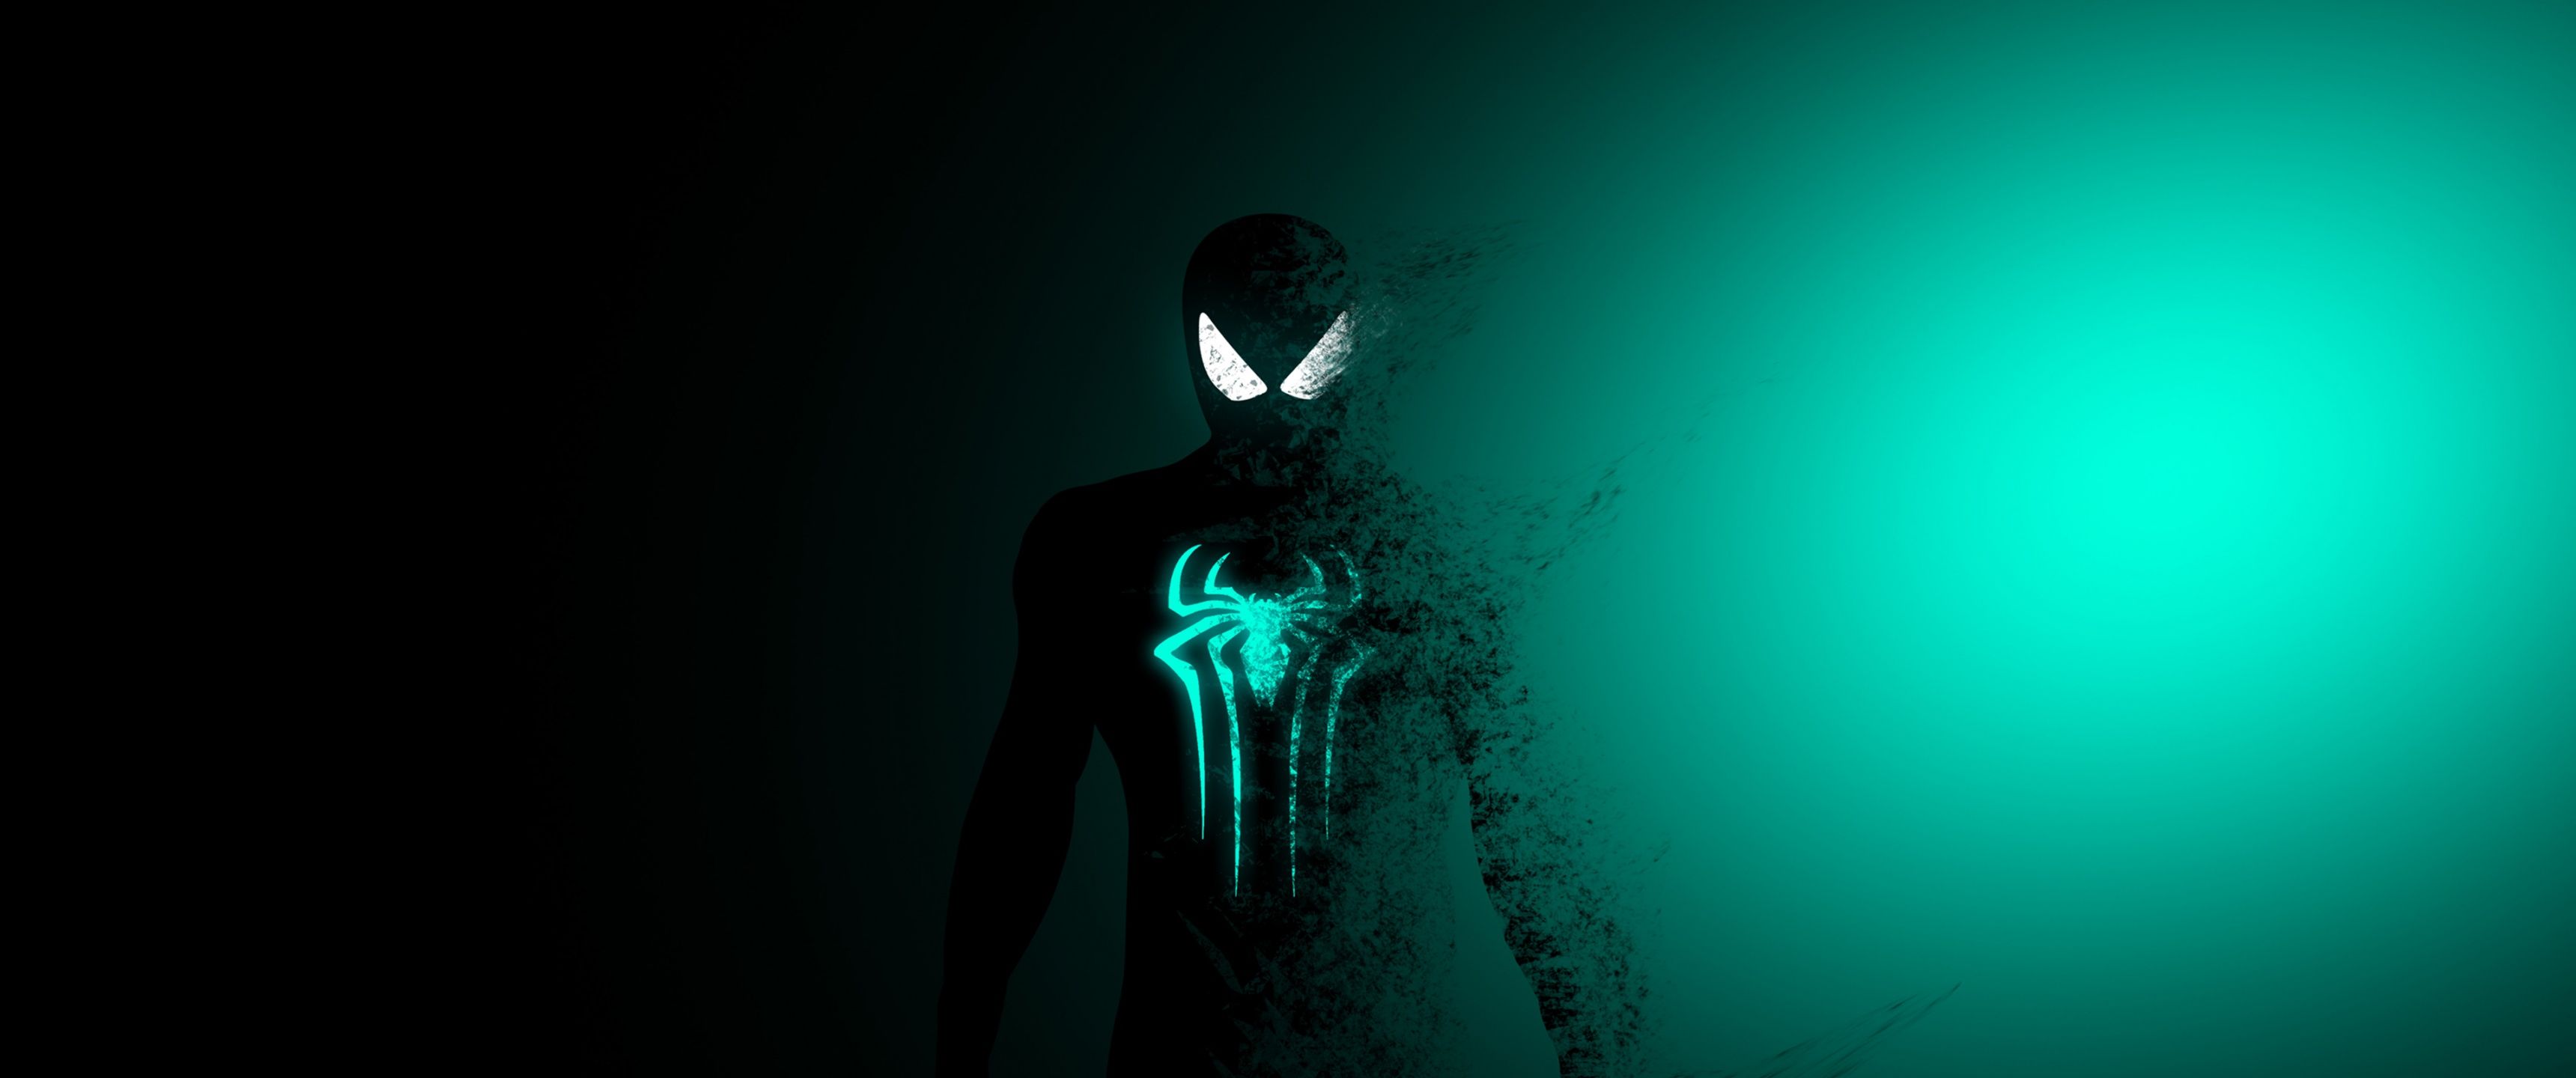 Spider Man Wallpaper 4K, Dark, Cyan, Minimal, Graphics CGI